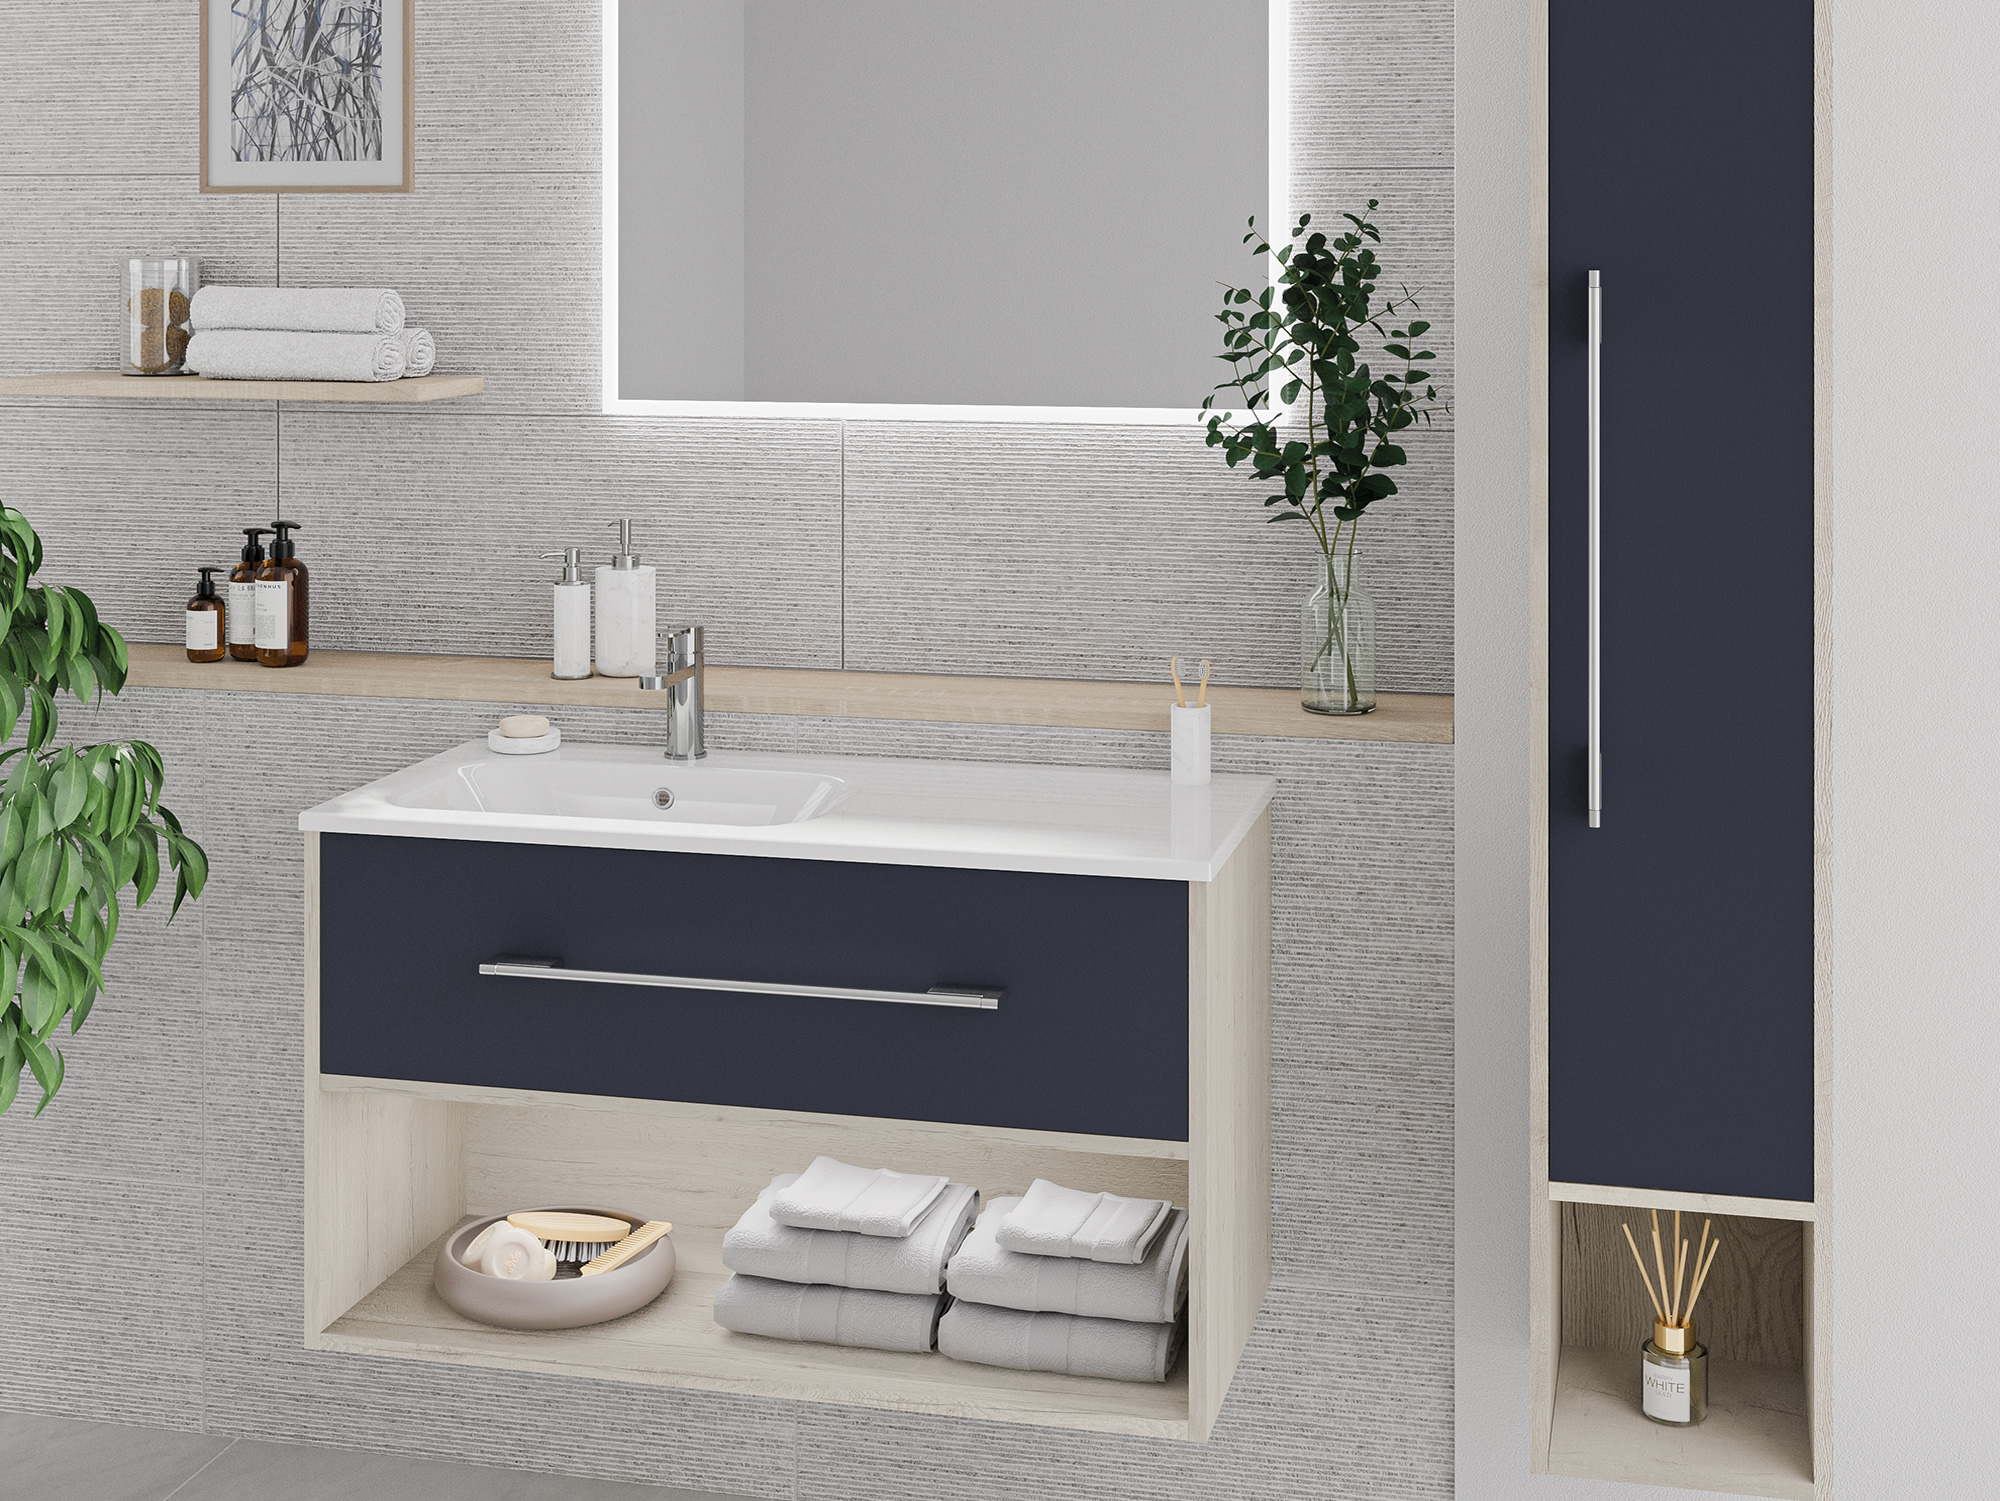 Design Apri Indigo Bathroom